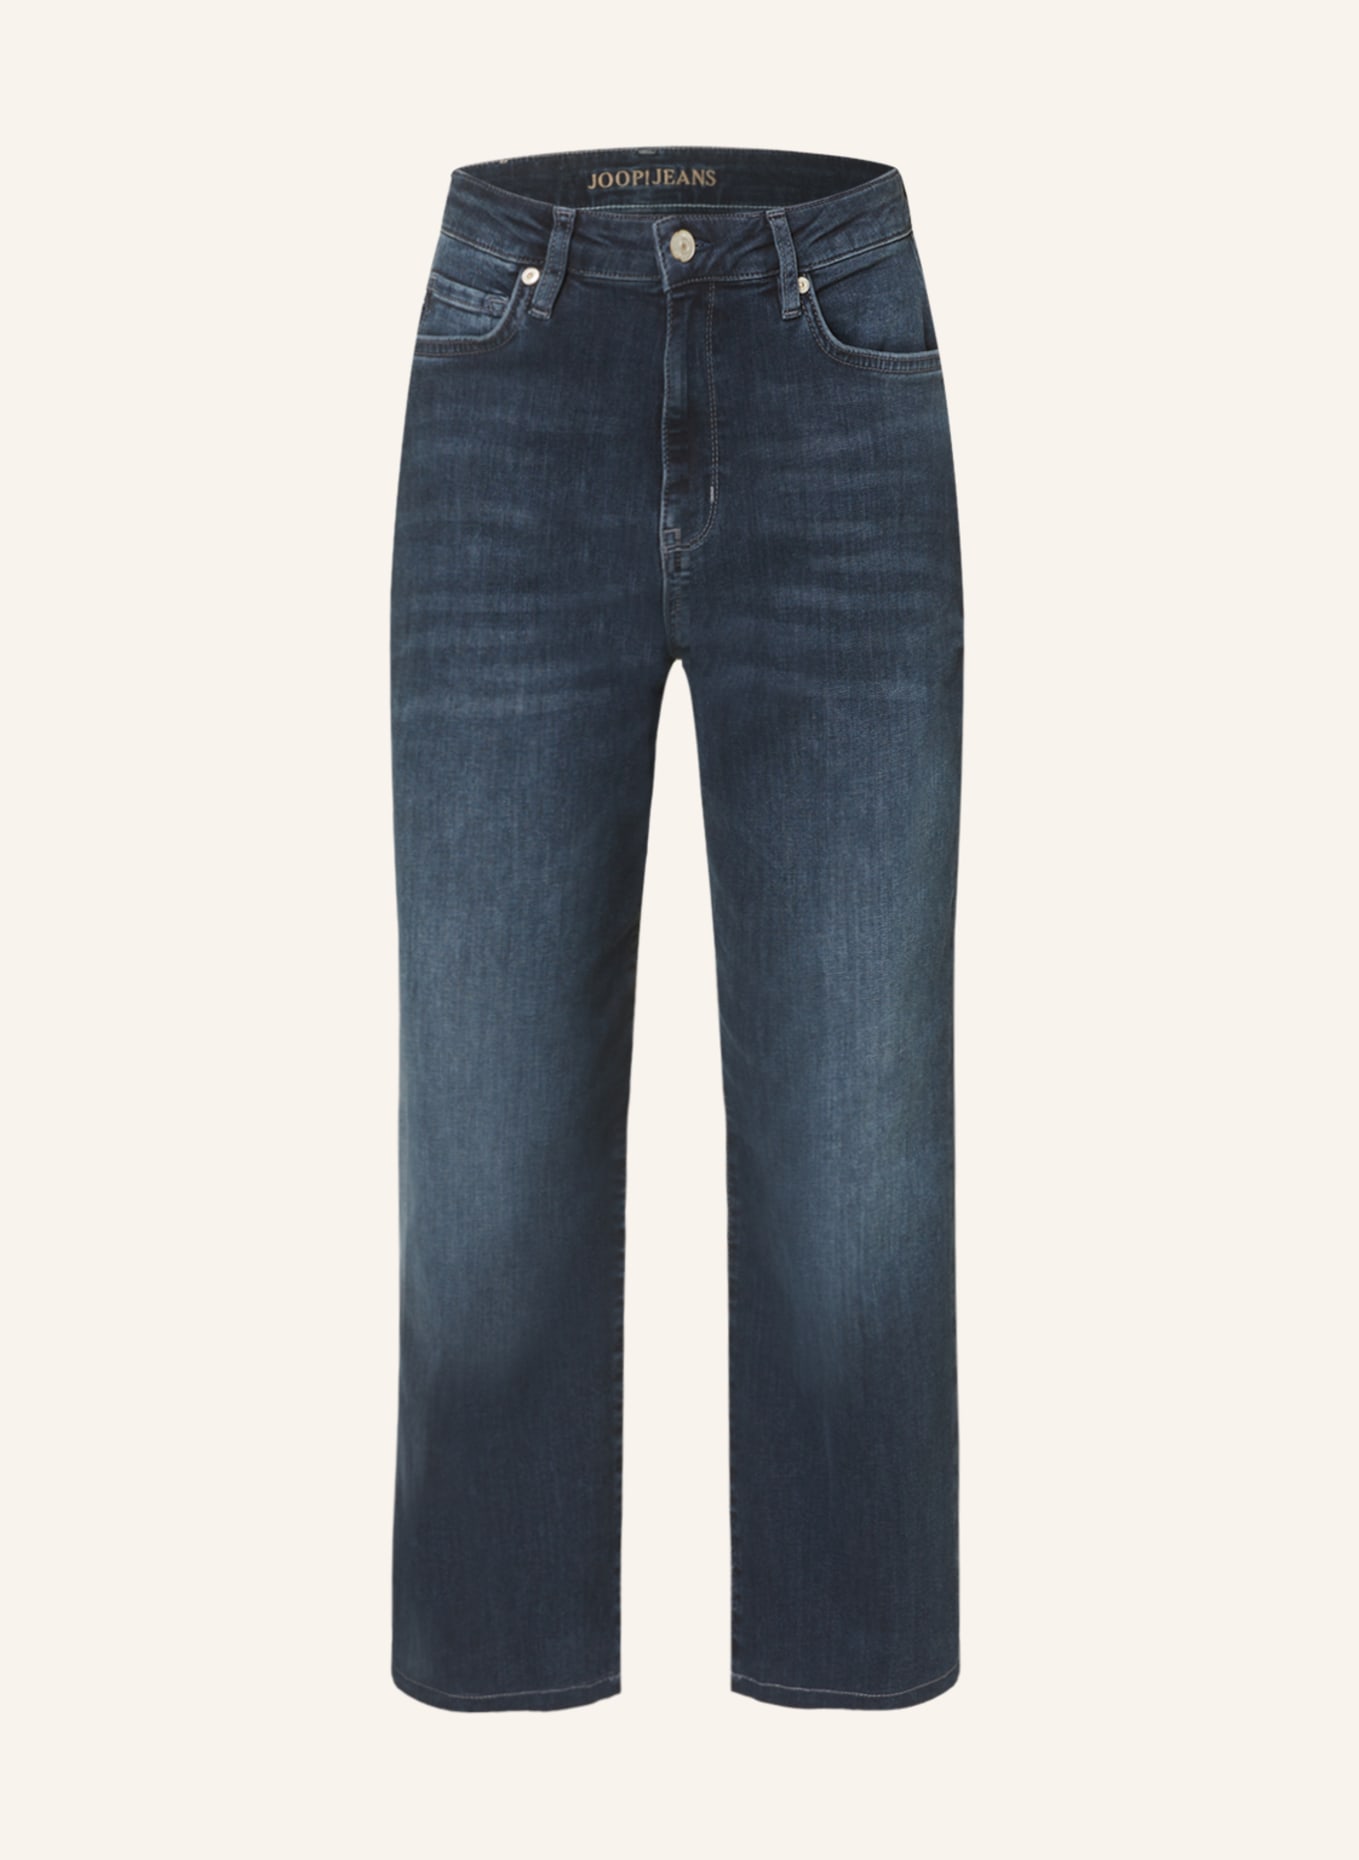 JOOP! Jeans-Culotte, Farbe: 404 Dark Blue                  404 (Bild 1)